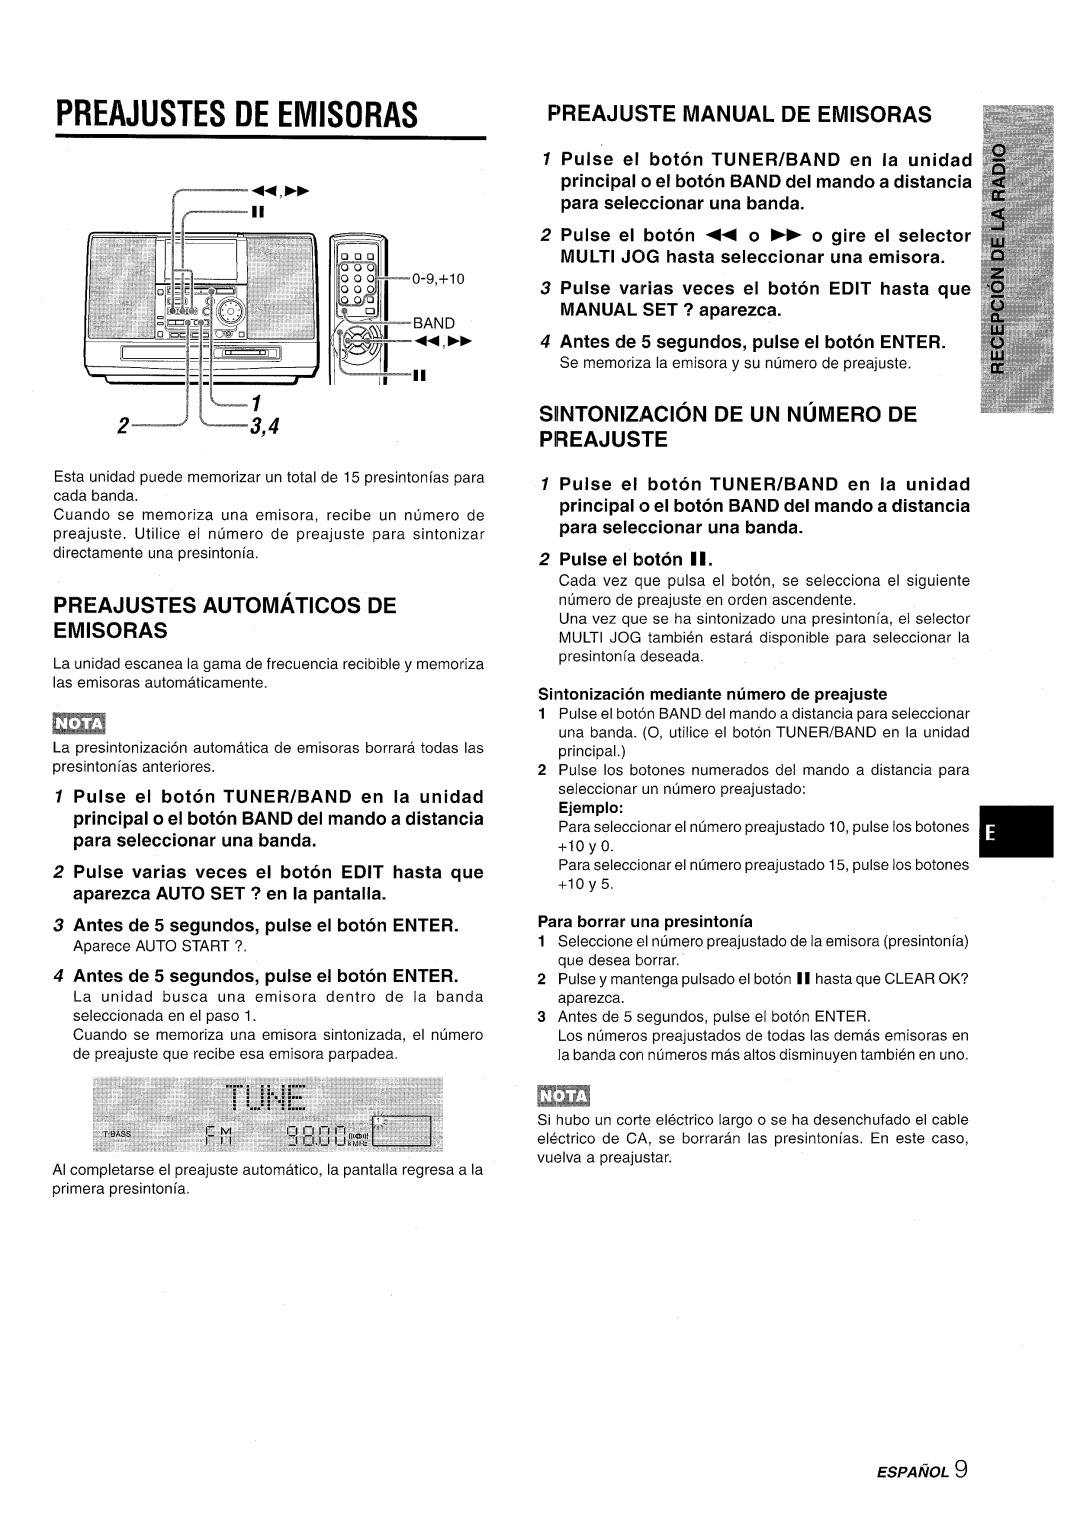 Aiwa CSD-MD50 manual Preajustes De Emisoras, F’Reajuste Manual De Emisoras, Preajustes Automatics De Emisoras 